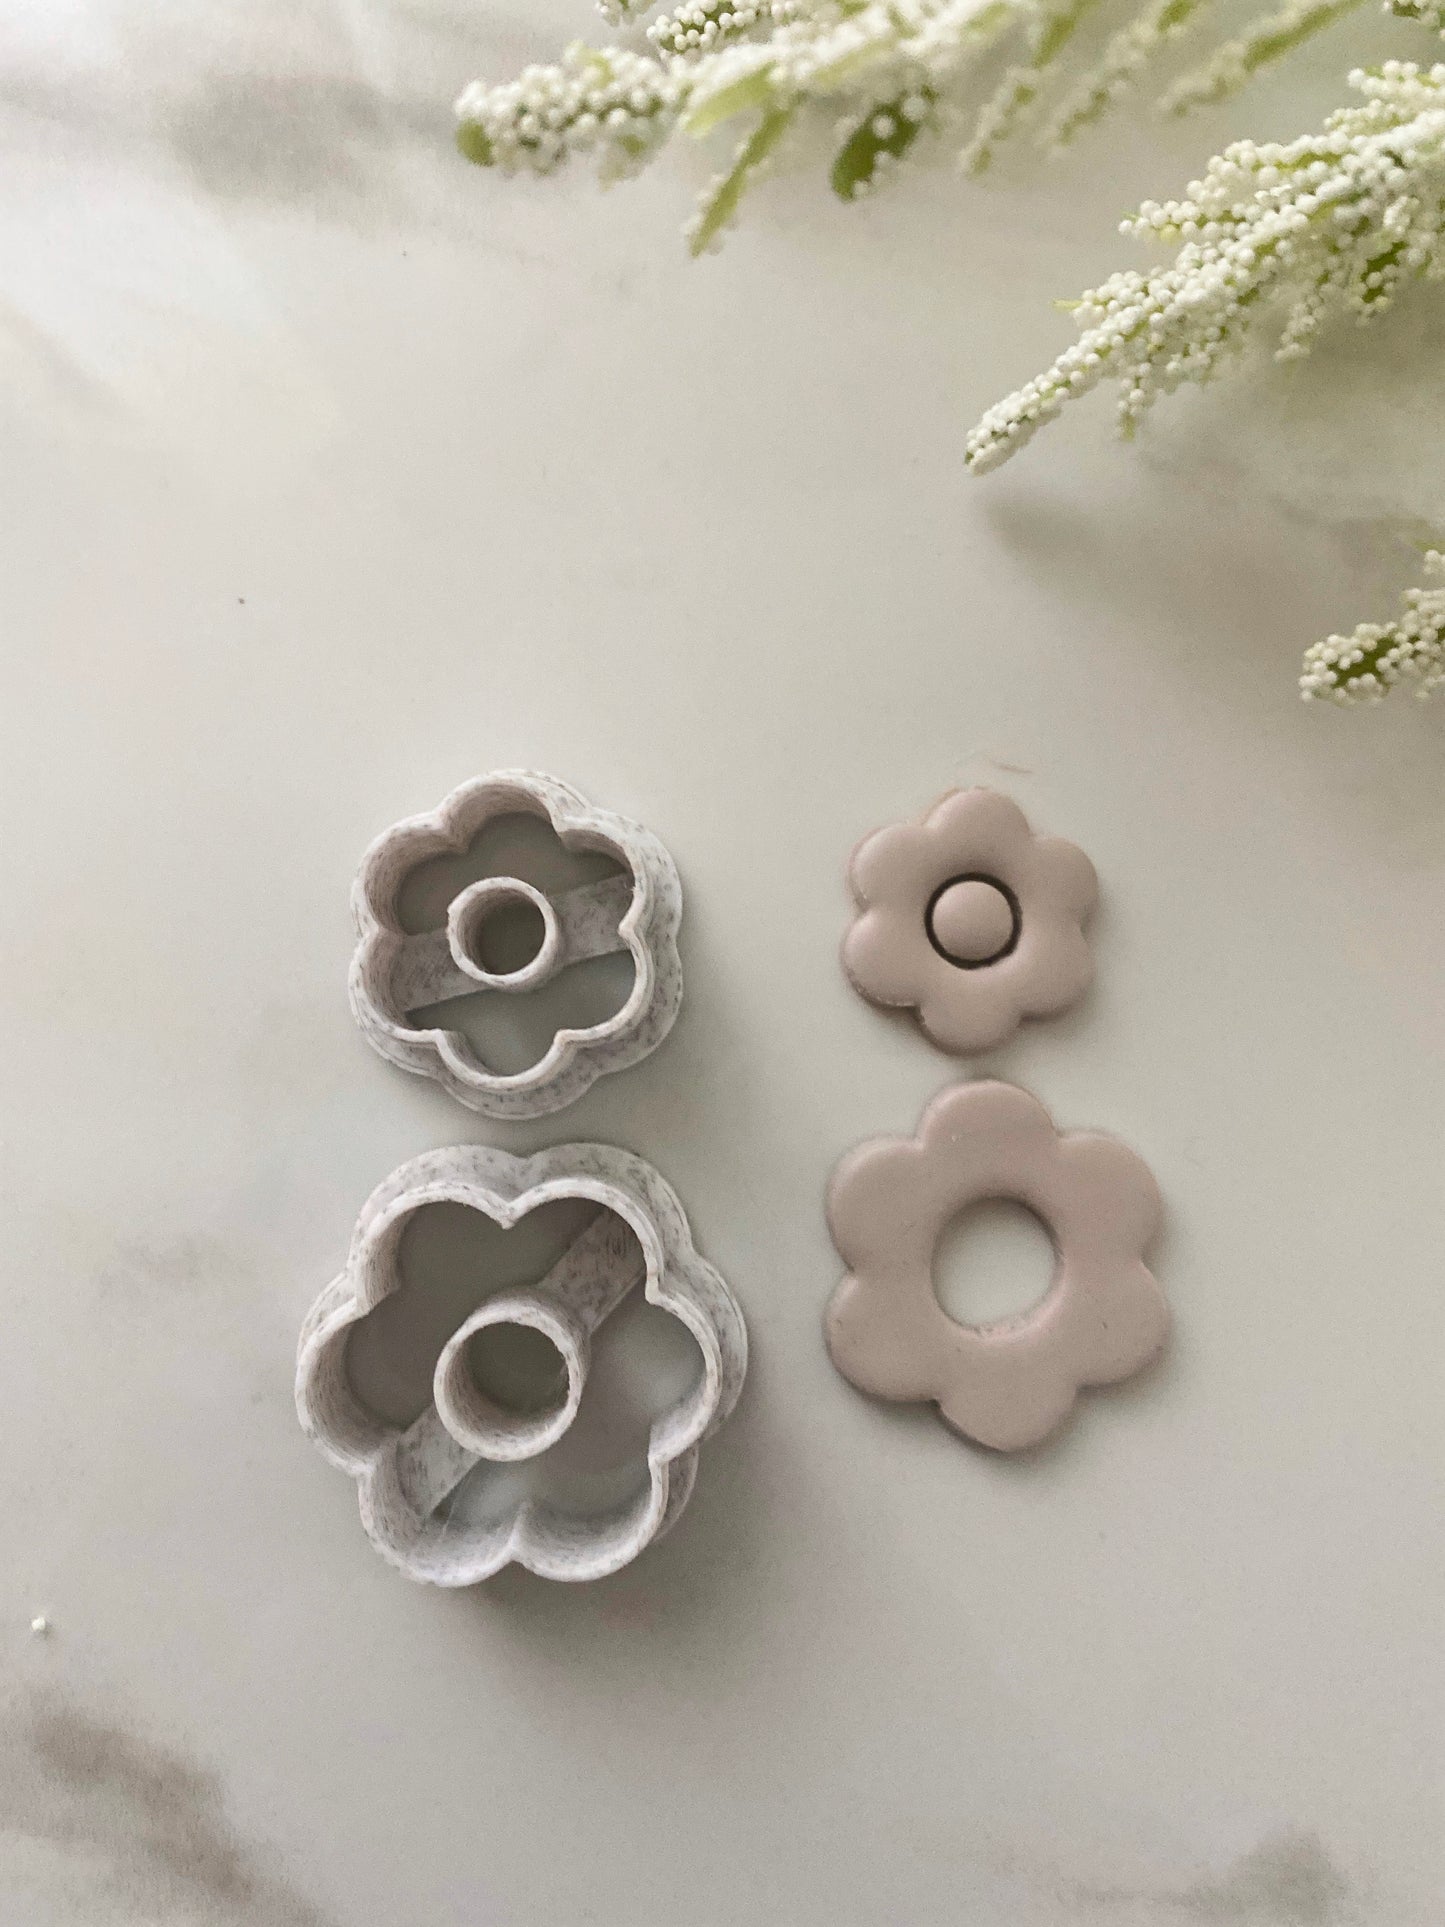 Retro Flower - Polymer Clay Cutter